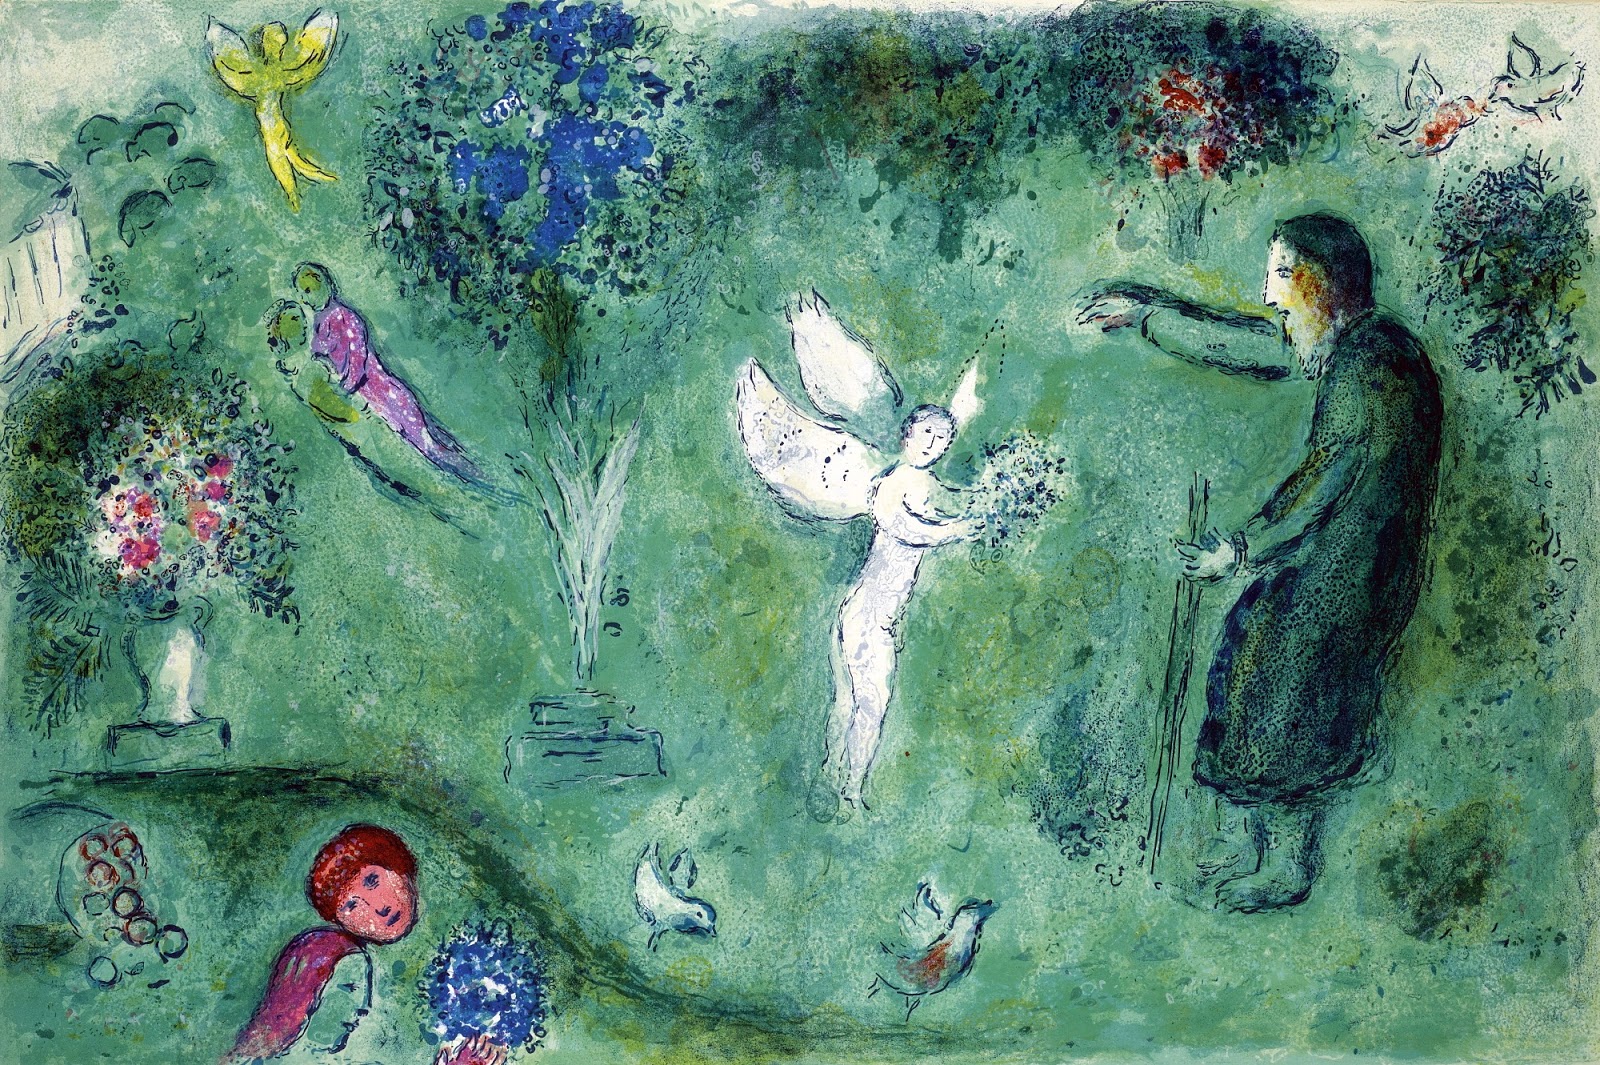 Marc+Chagall-1887-1985 (227).jpg